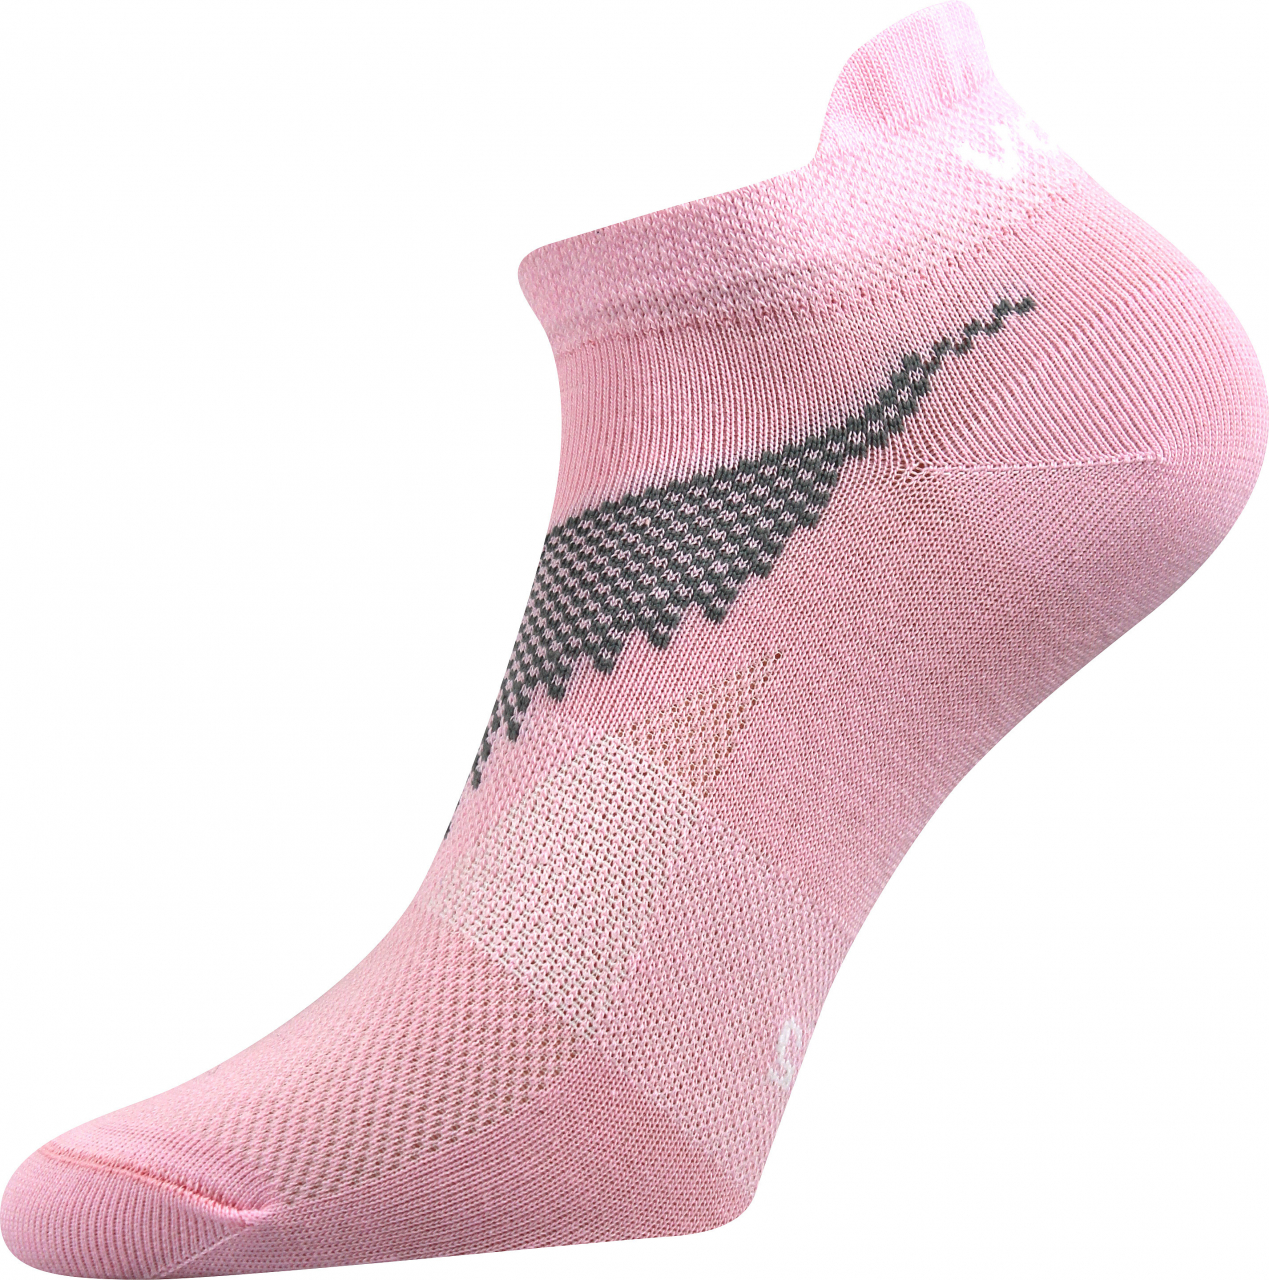 Ponožky sportovní nízké Voxx Iris - růžové, 39-42